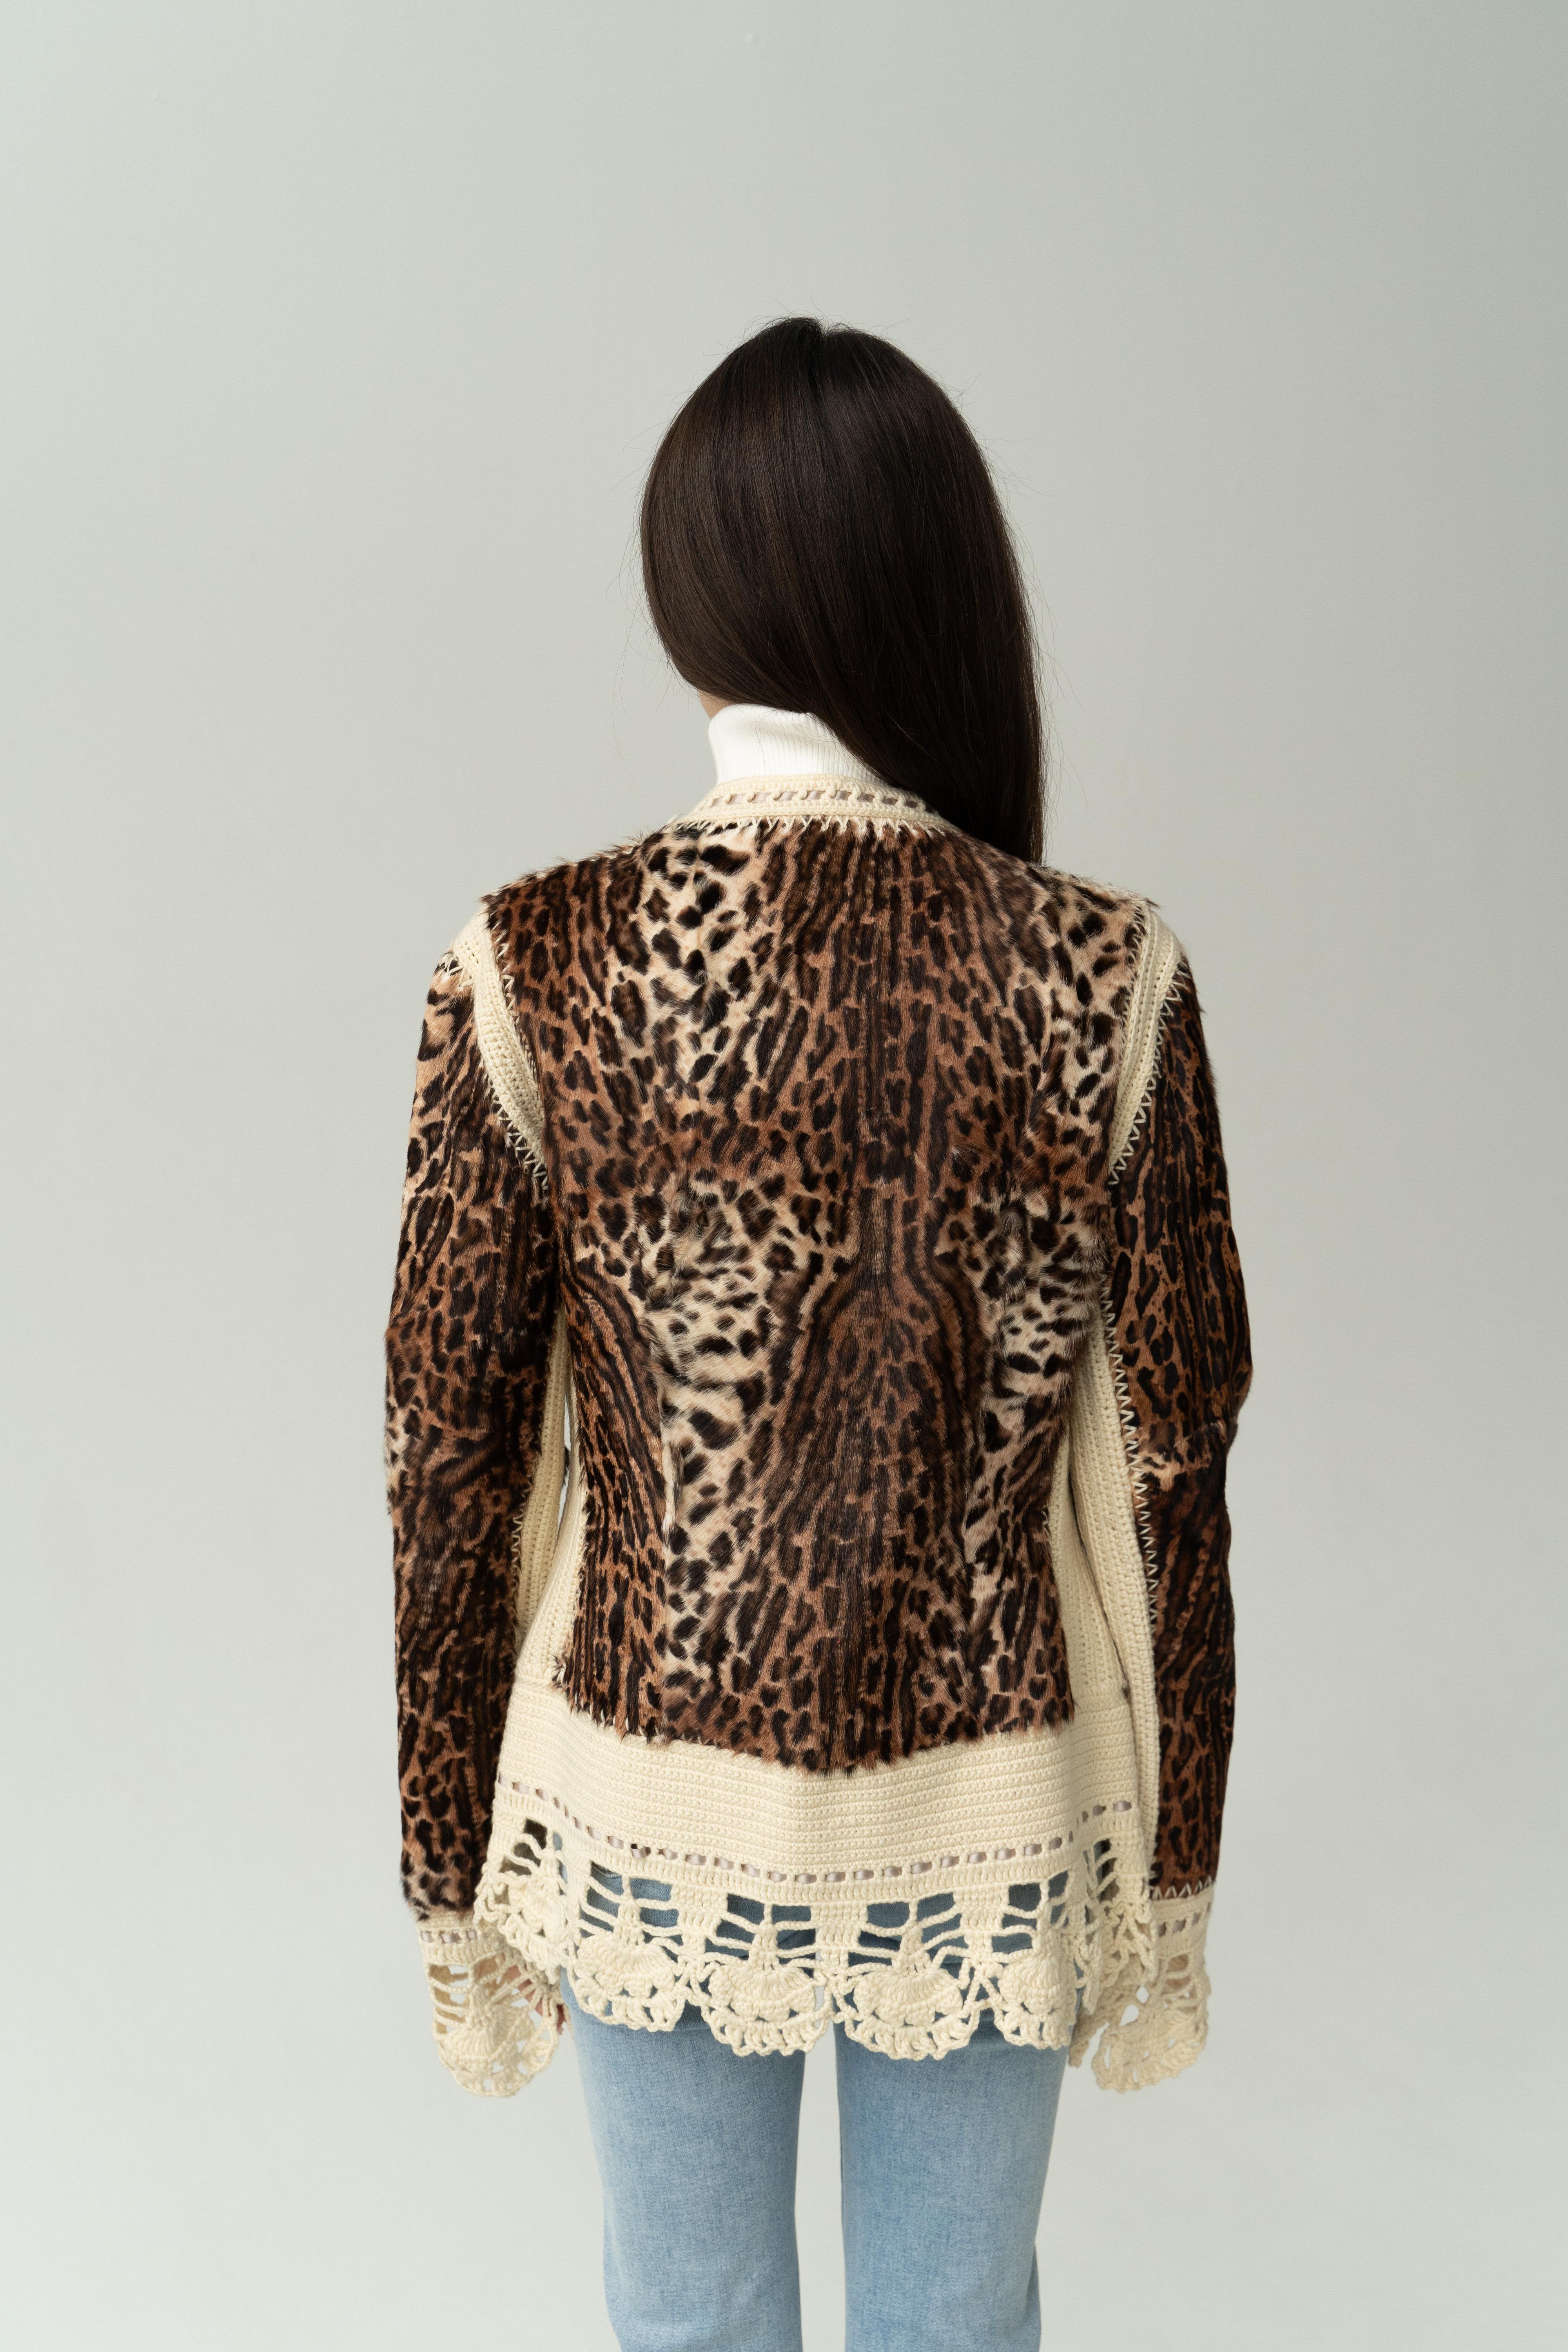 John Galliano for Christian Dior jacket 2005 IT 42 FR 38 Mizza Bricard leopard  For Sale 1